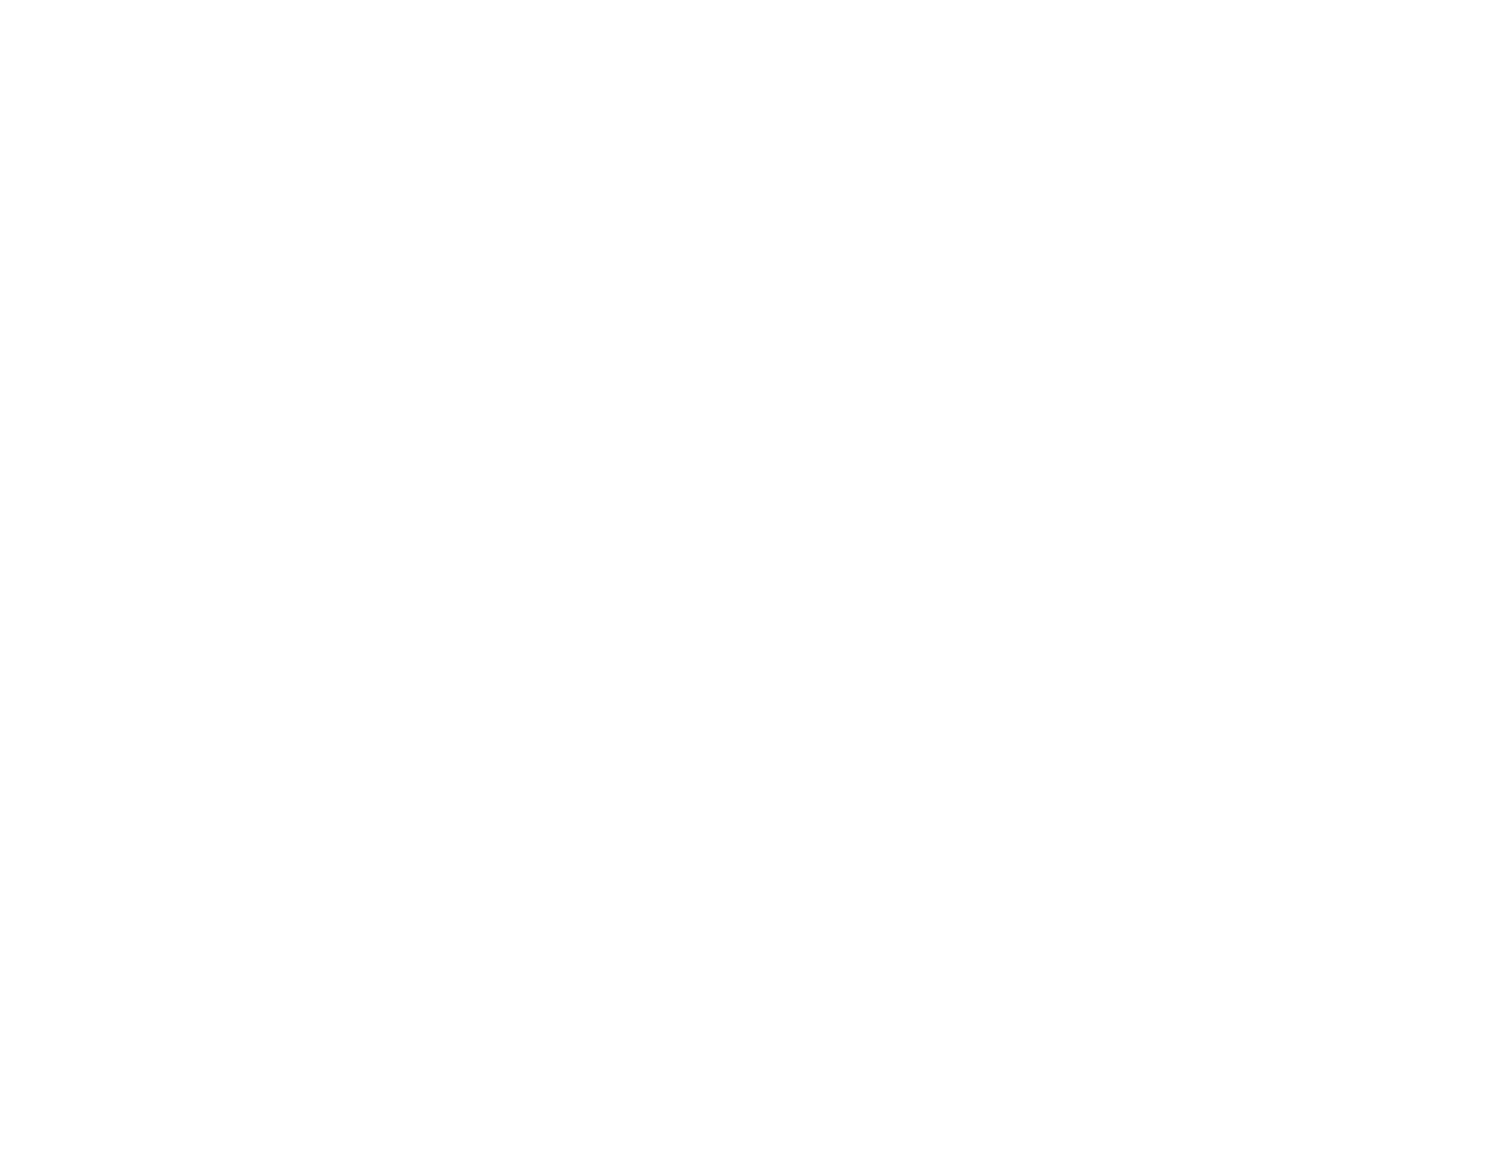 The Farmhouse at Jessup Farm